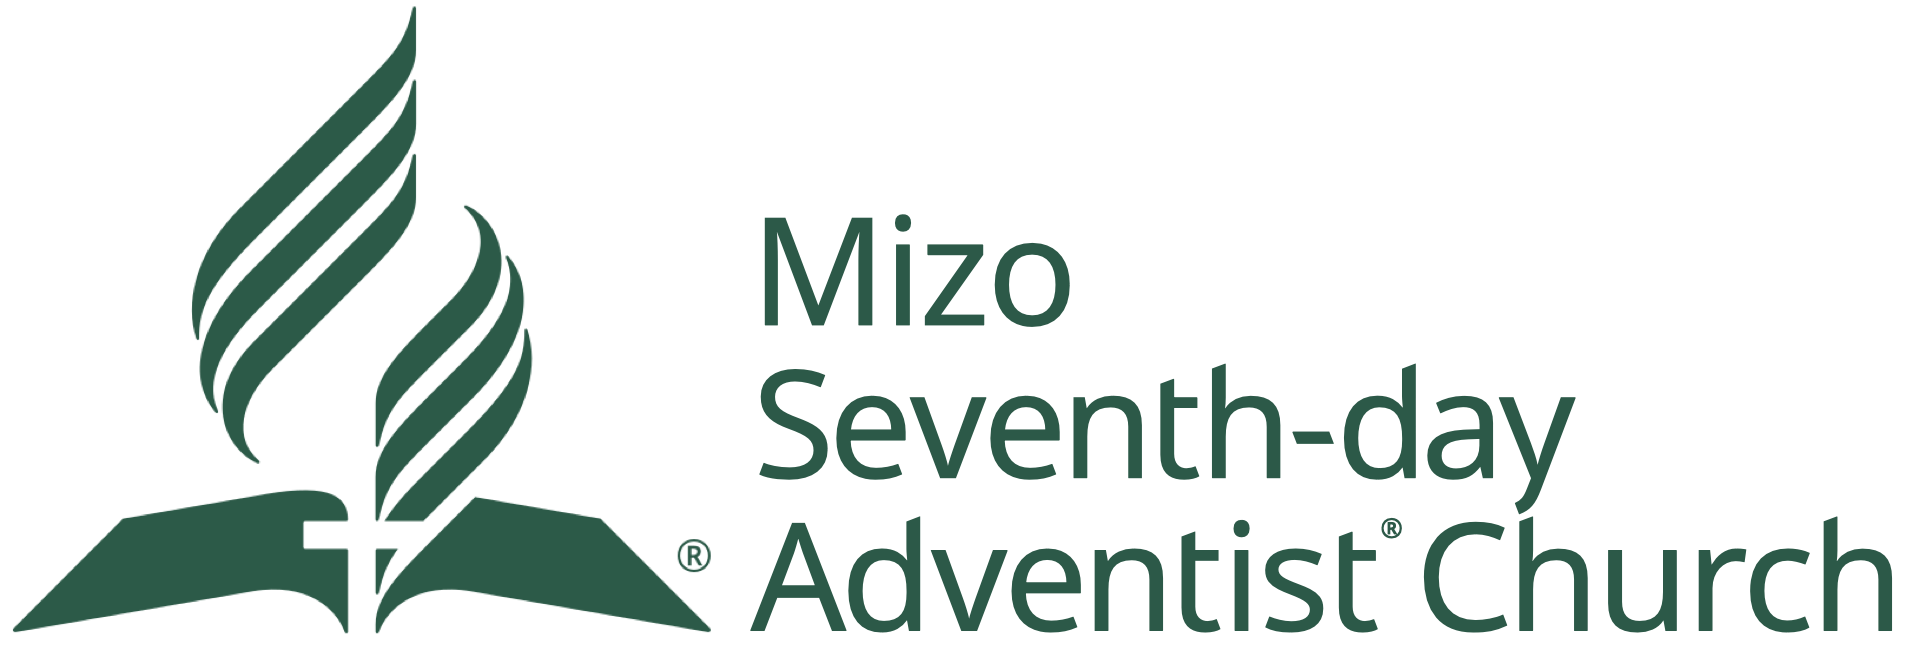 Mizo Adventist Logo_Tarry